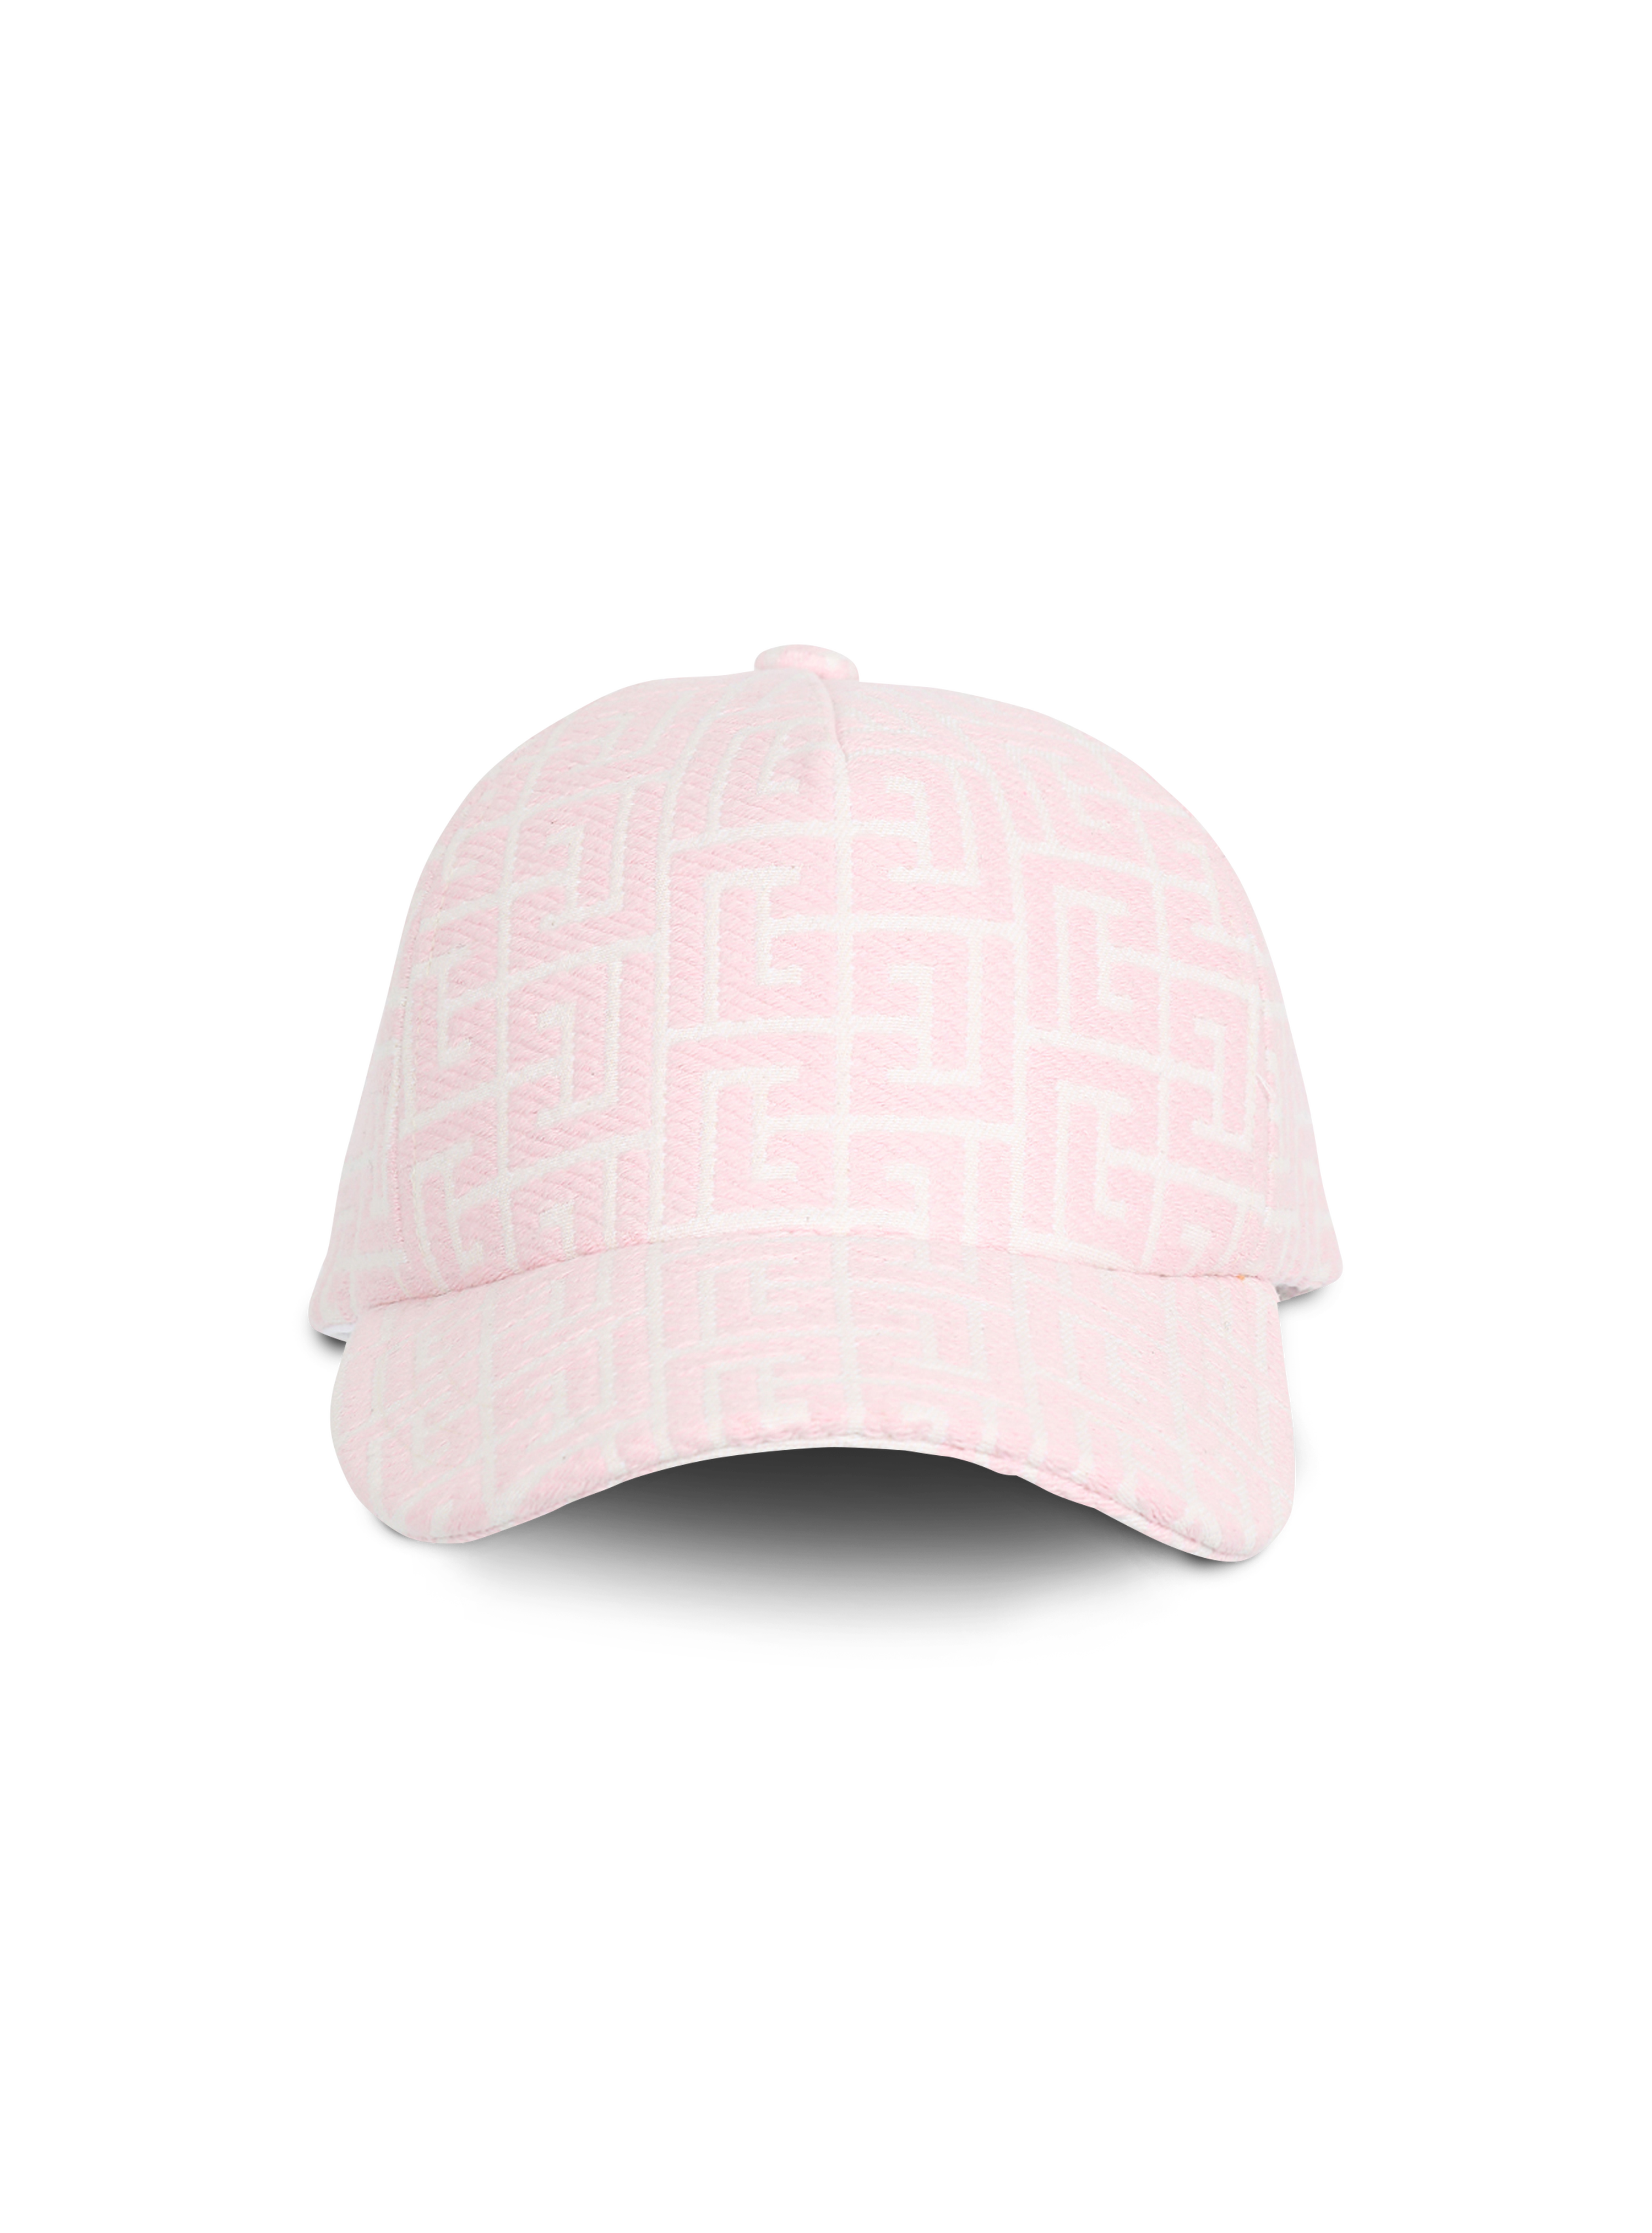 Balmain-monogrammed jacquard cap, pink